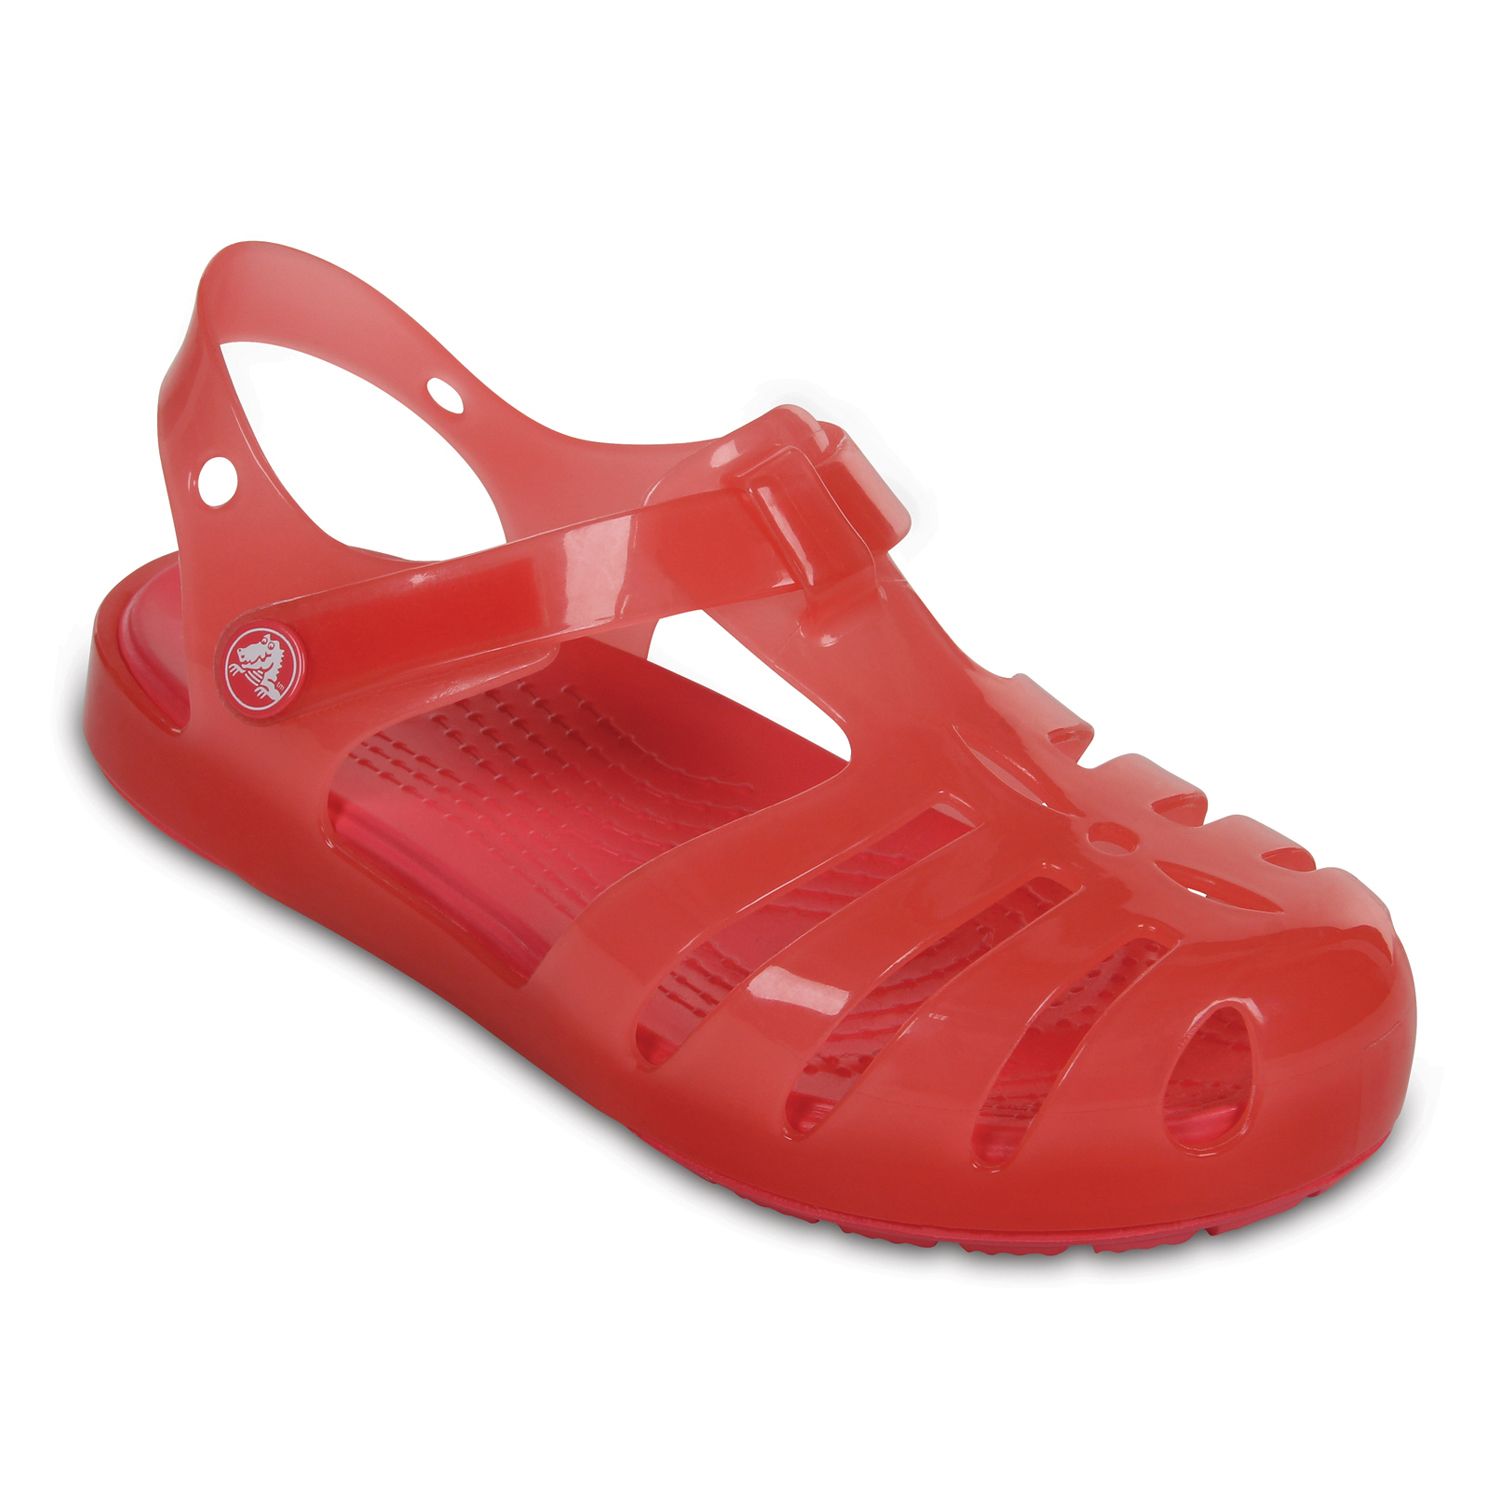 crocs isabella sandal toddler